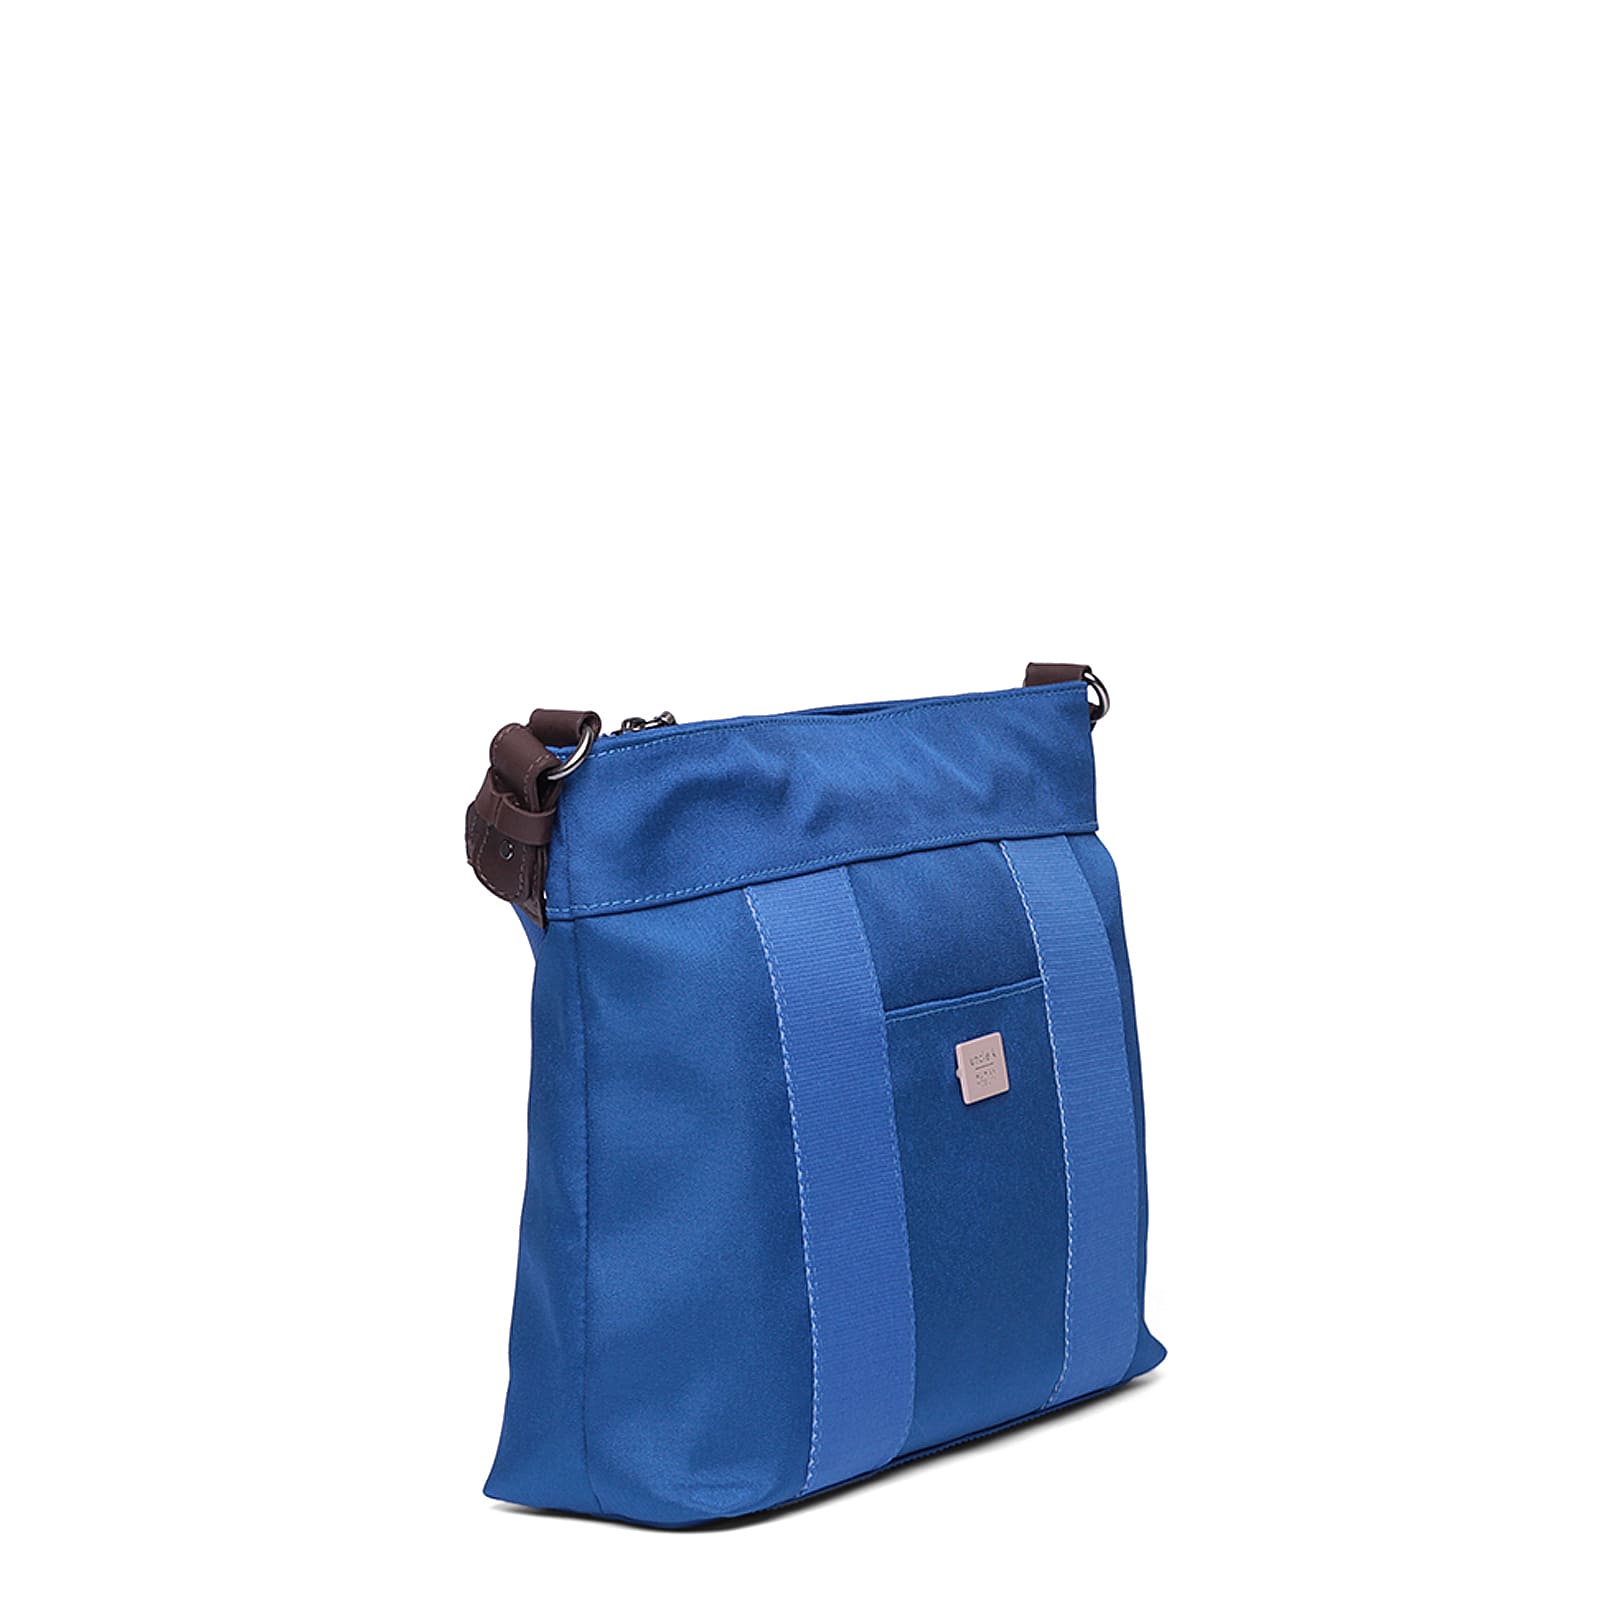 bolsa-nylon-61090-v24-unclek-azul-escuro-2